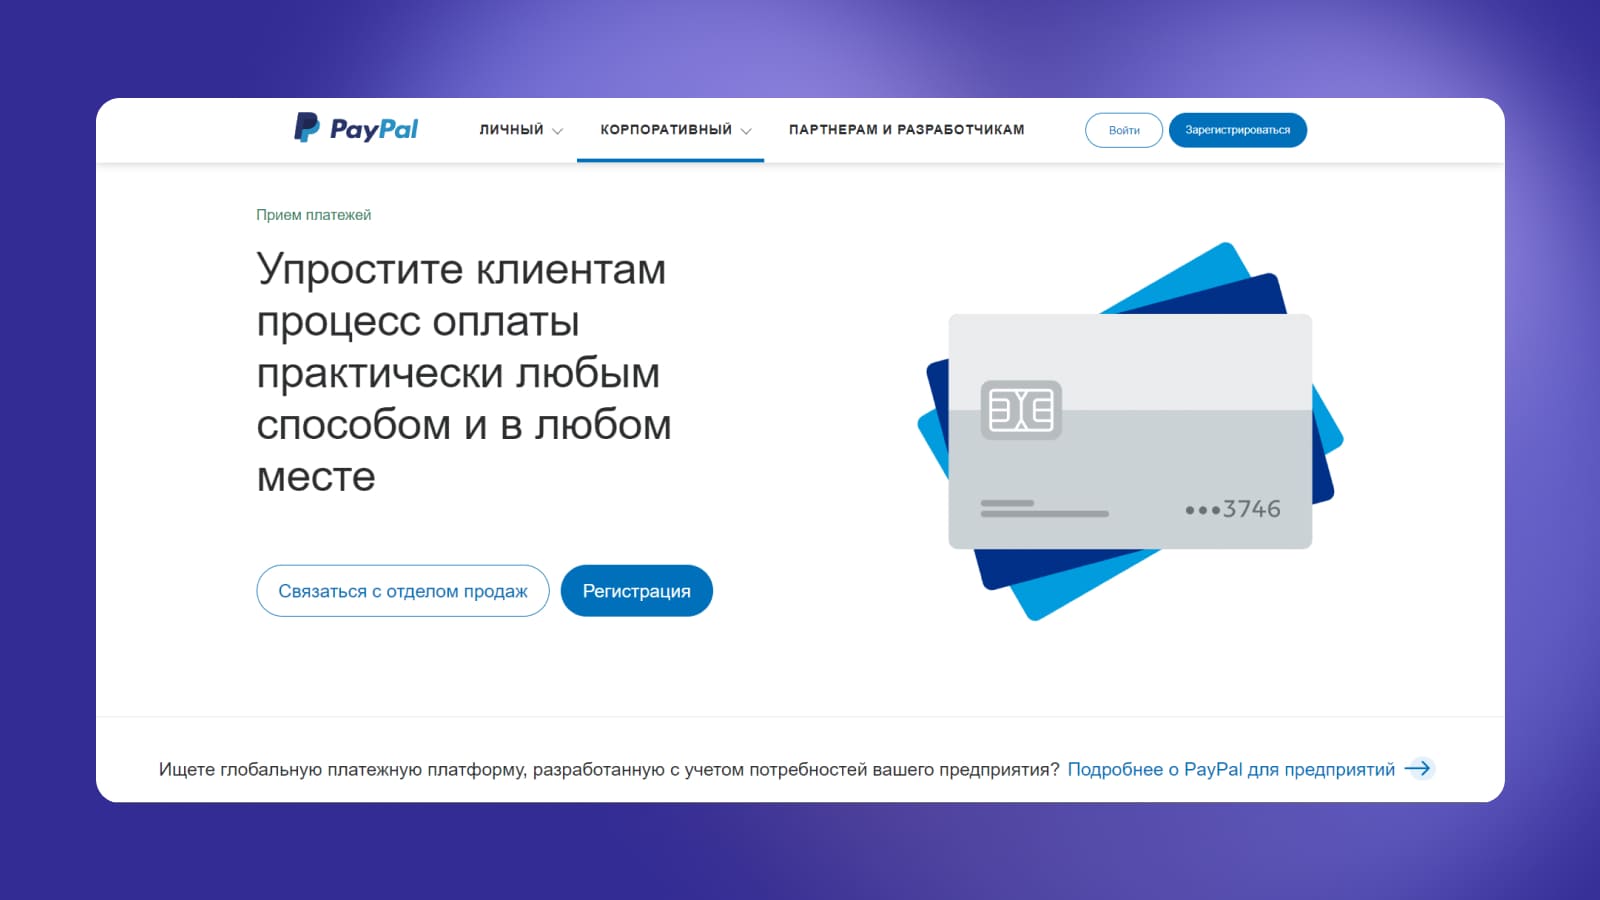 PayPal — аналог Stripe для приема международных платежей.